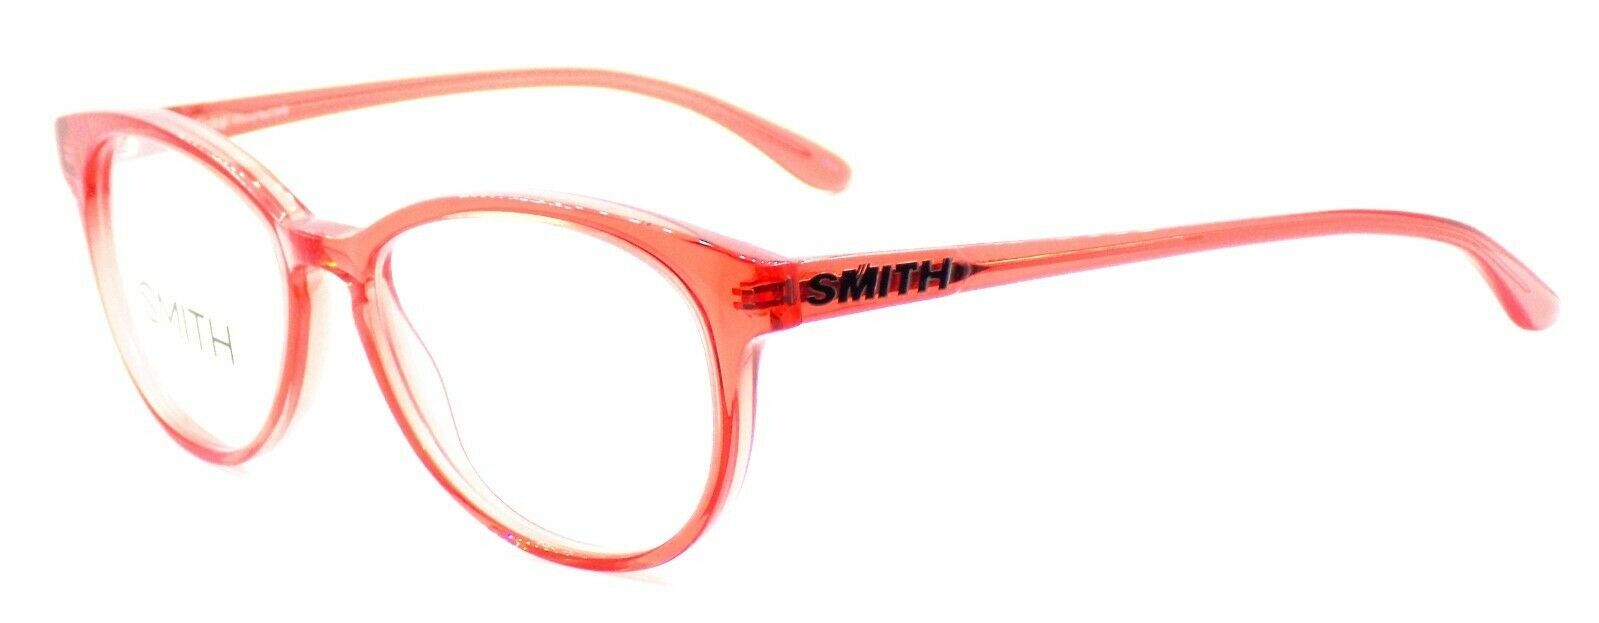 1-SMITH Optics Finley 5M9 Women's Eyeglasses Frames 51-16-140 Crystal Red + CASE-716737716403-IKSpecs